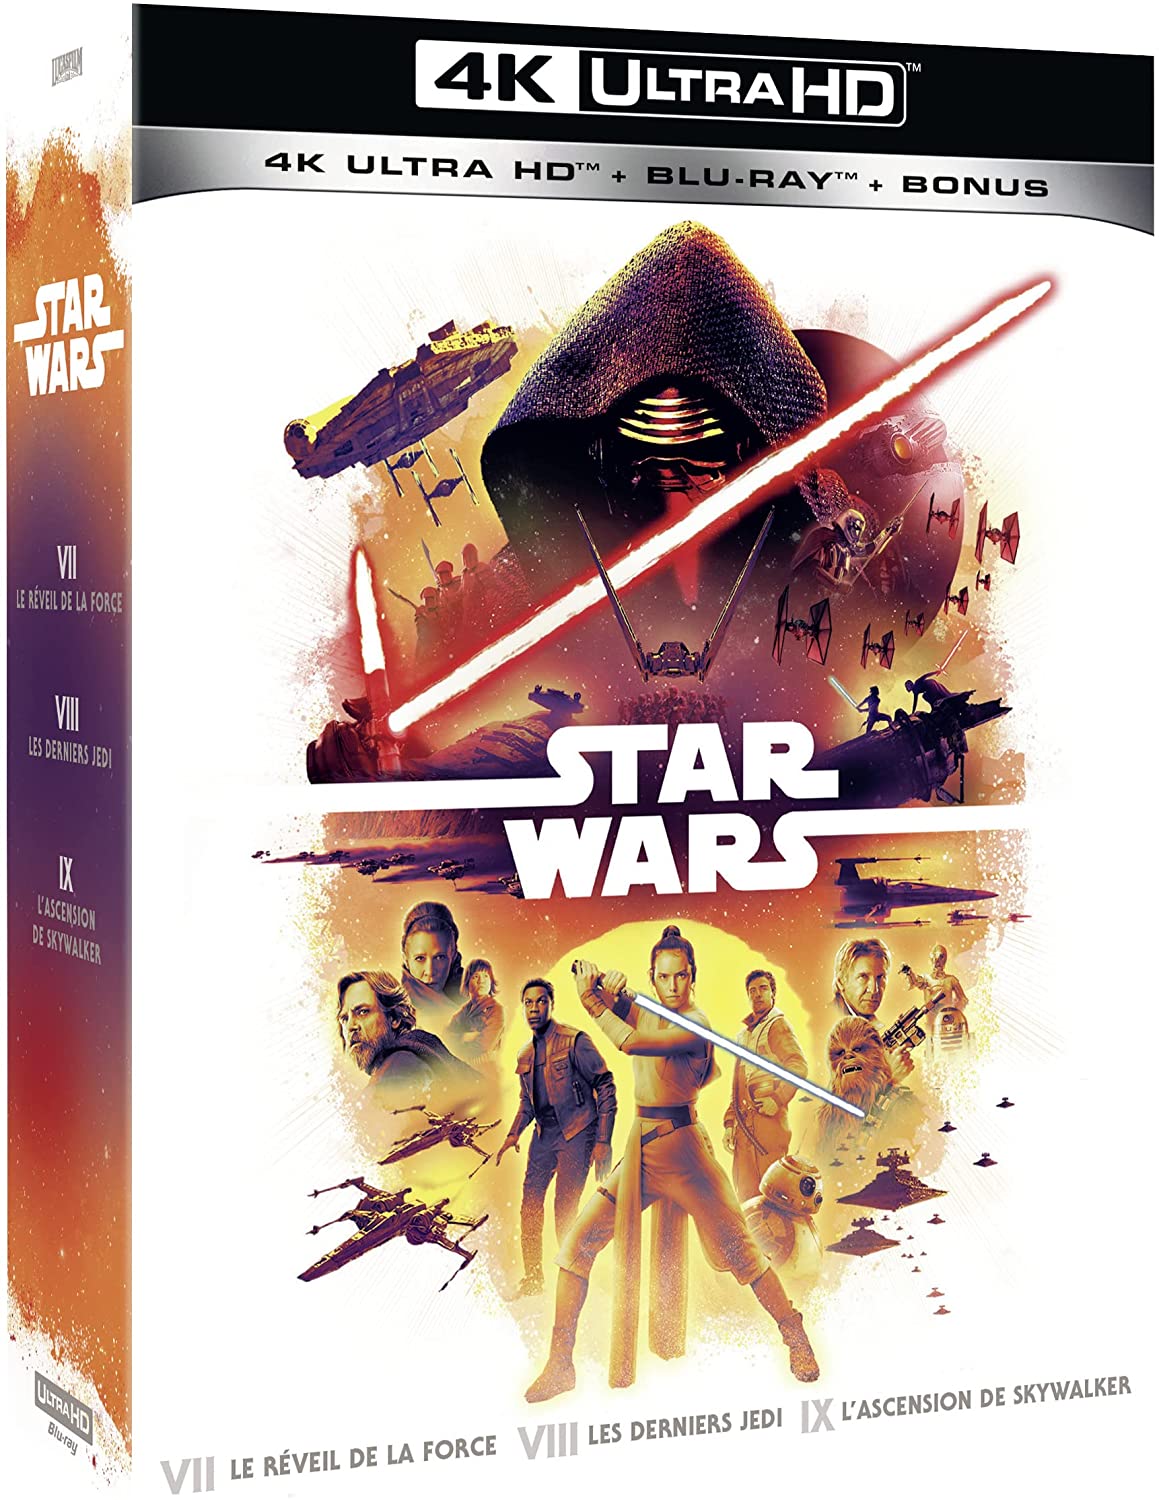 Les prochaines sorties Blu-ray et DVD de Lucasfilm en France